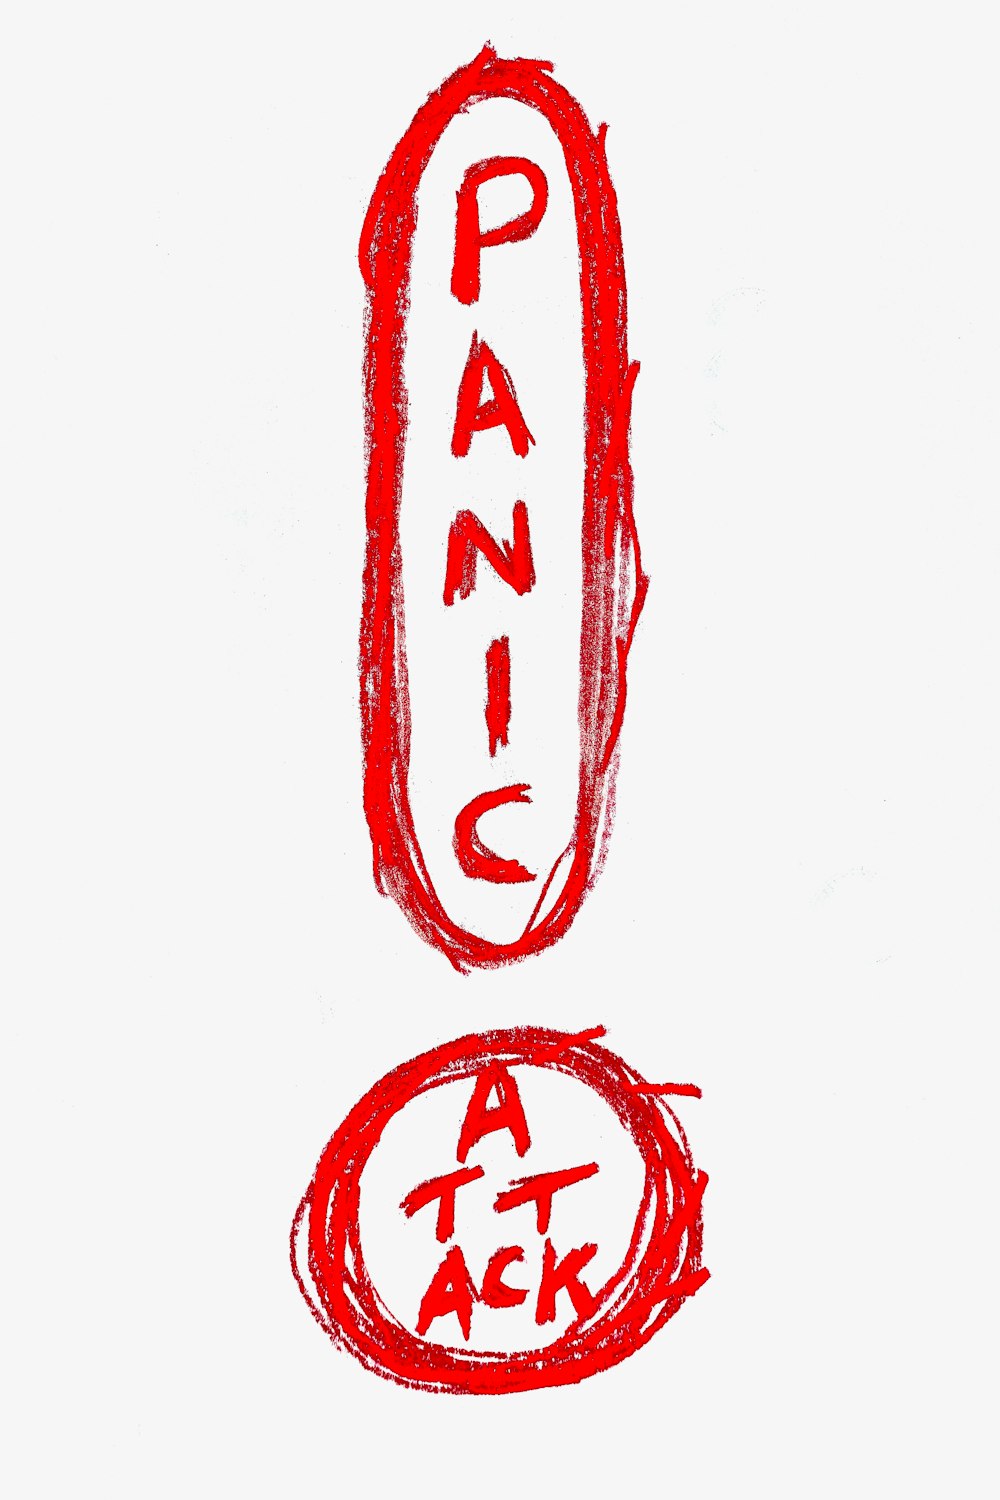 red and white letter b illustration